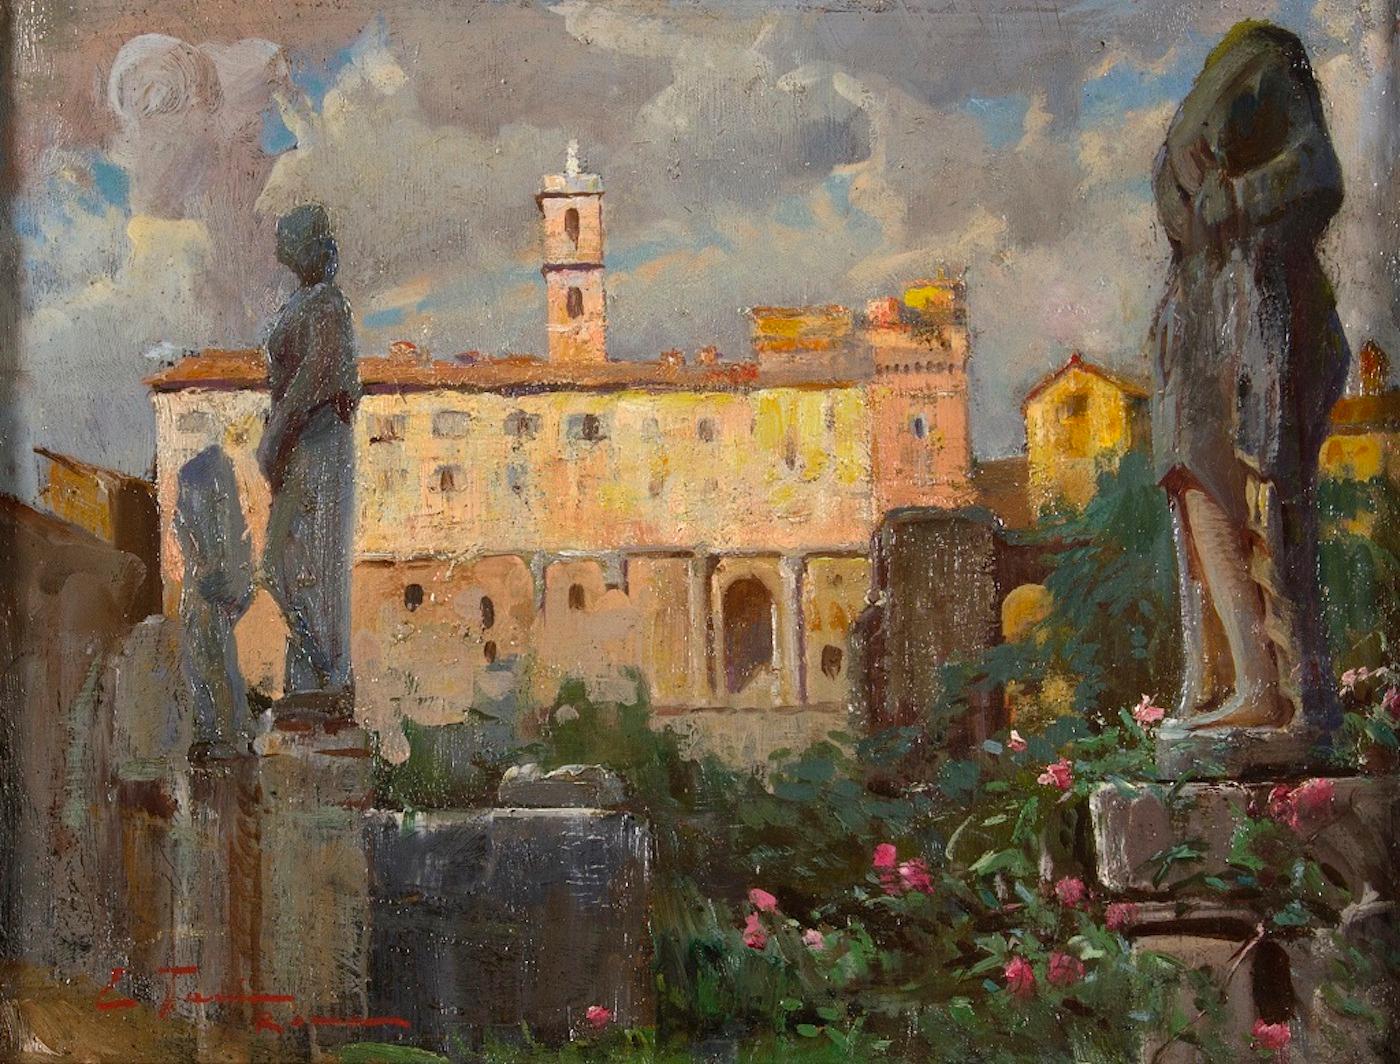 Edoardo Tani Figurative Painting - View of the Capitoline Hill (Rome) - Oil on Cardboard by E. Tani - 1930s